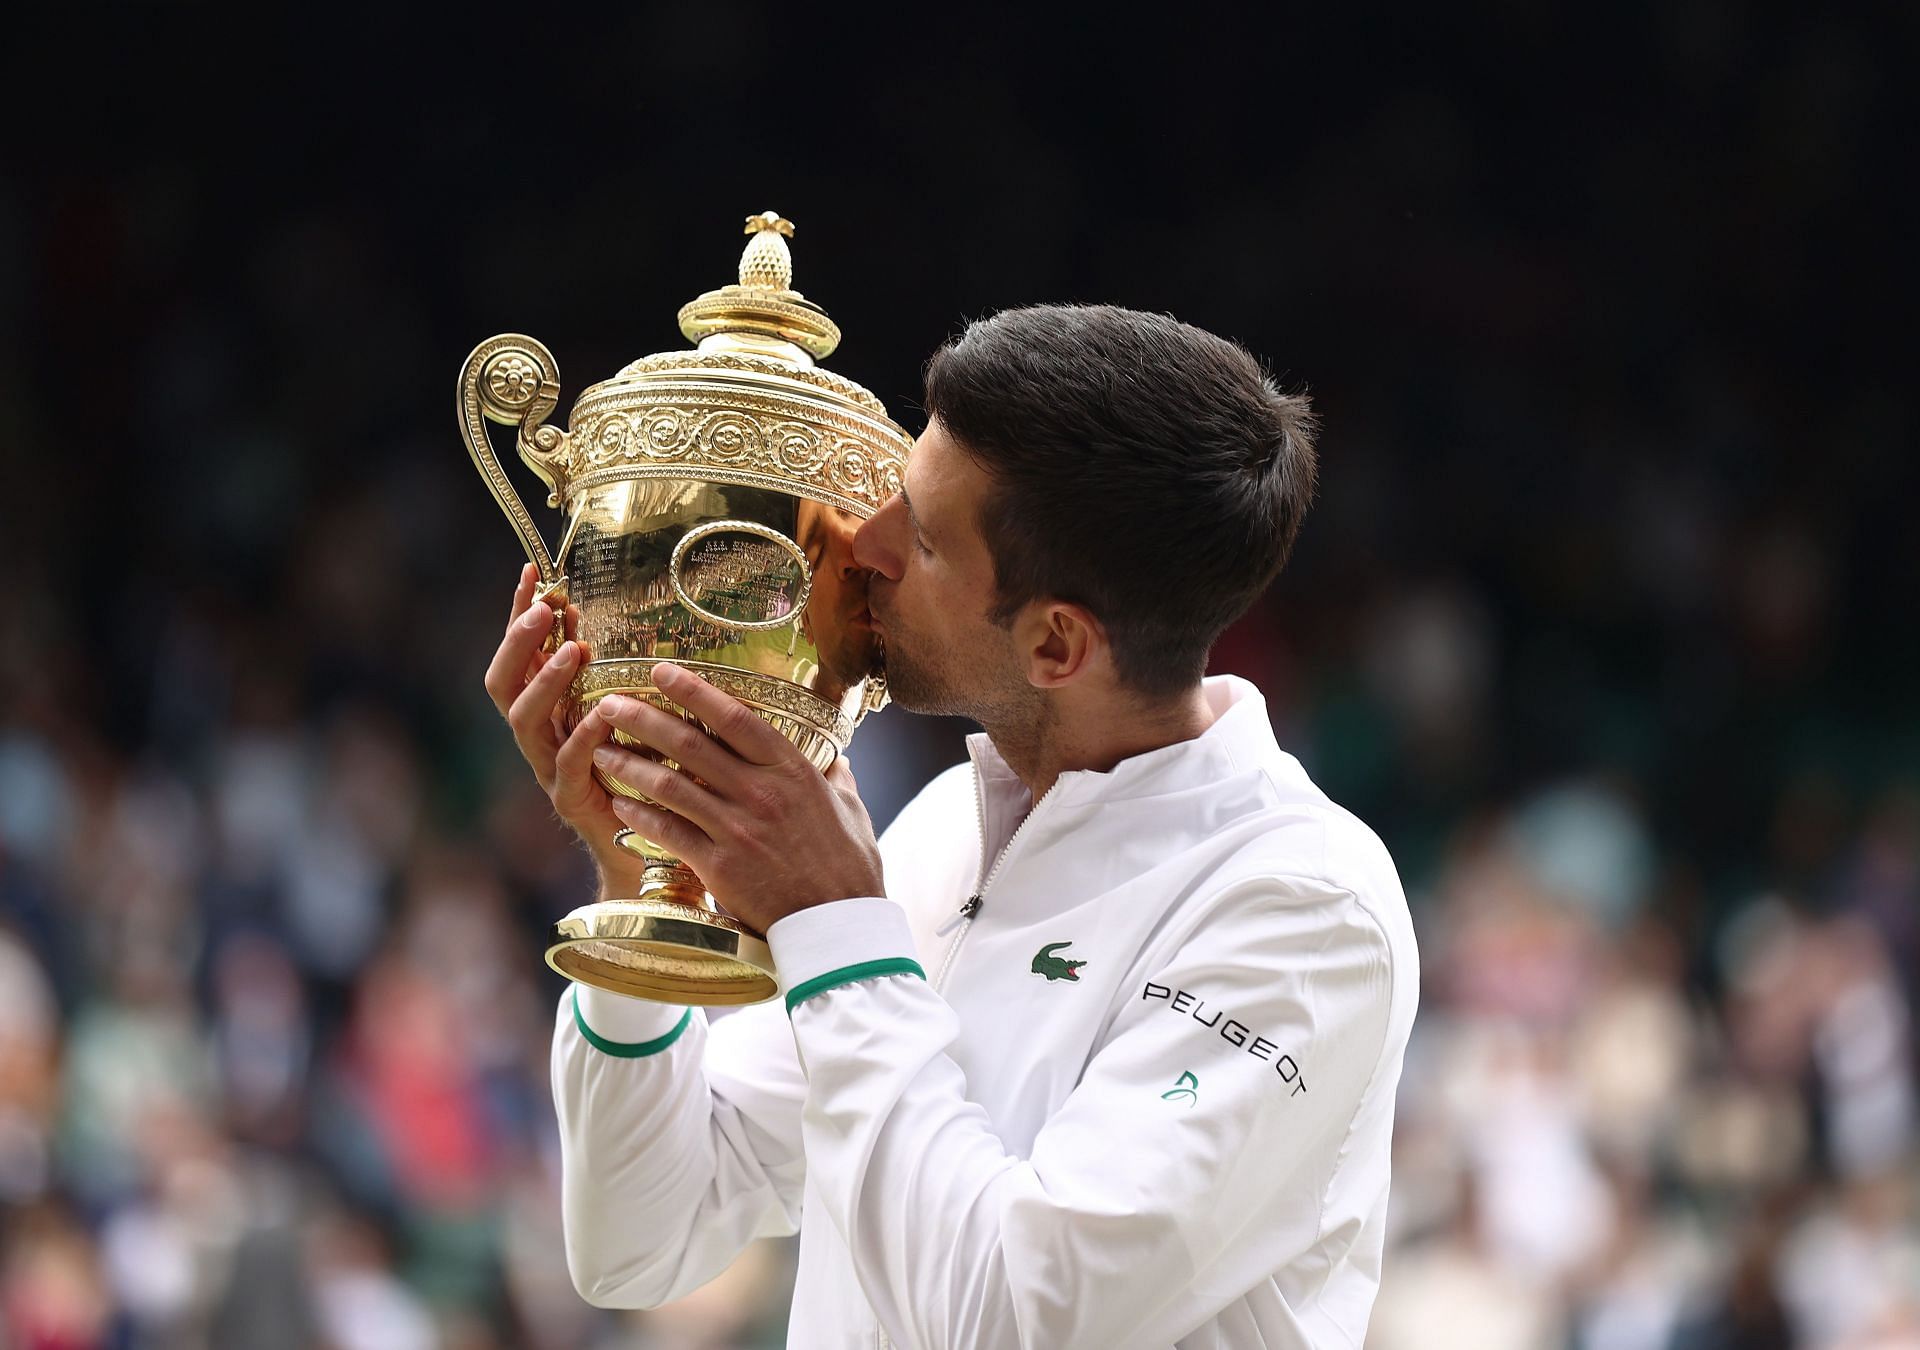 Novak Djokovic is playing for his fourth conseutive Wimbledon title.